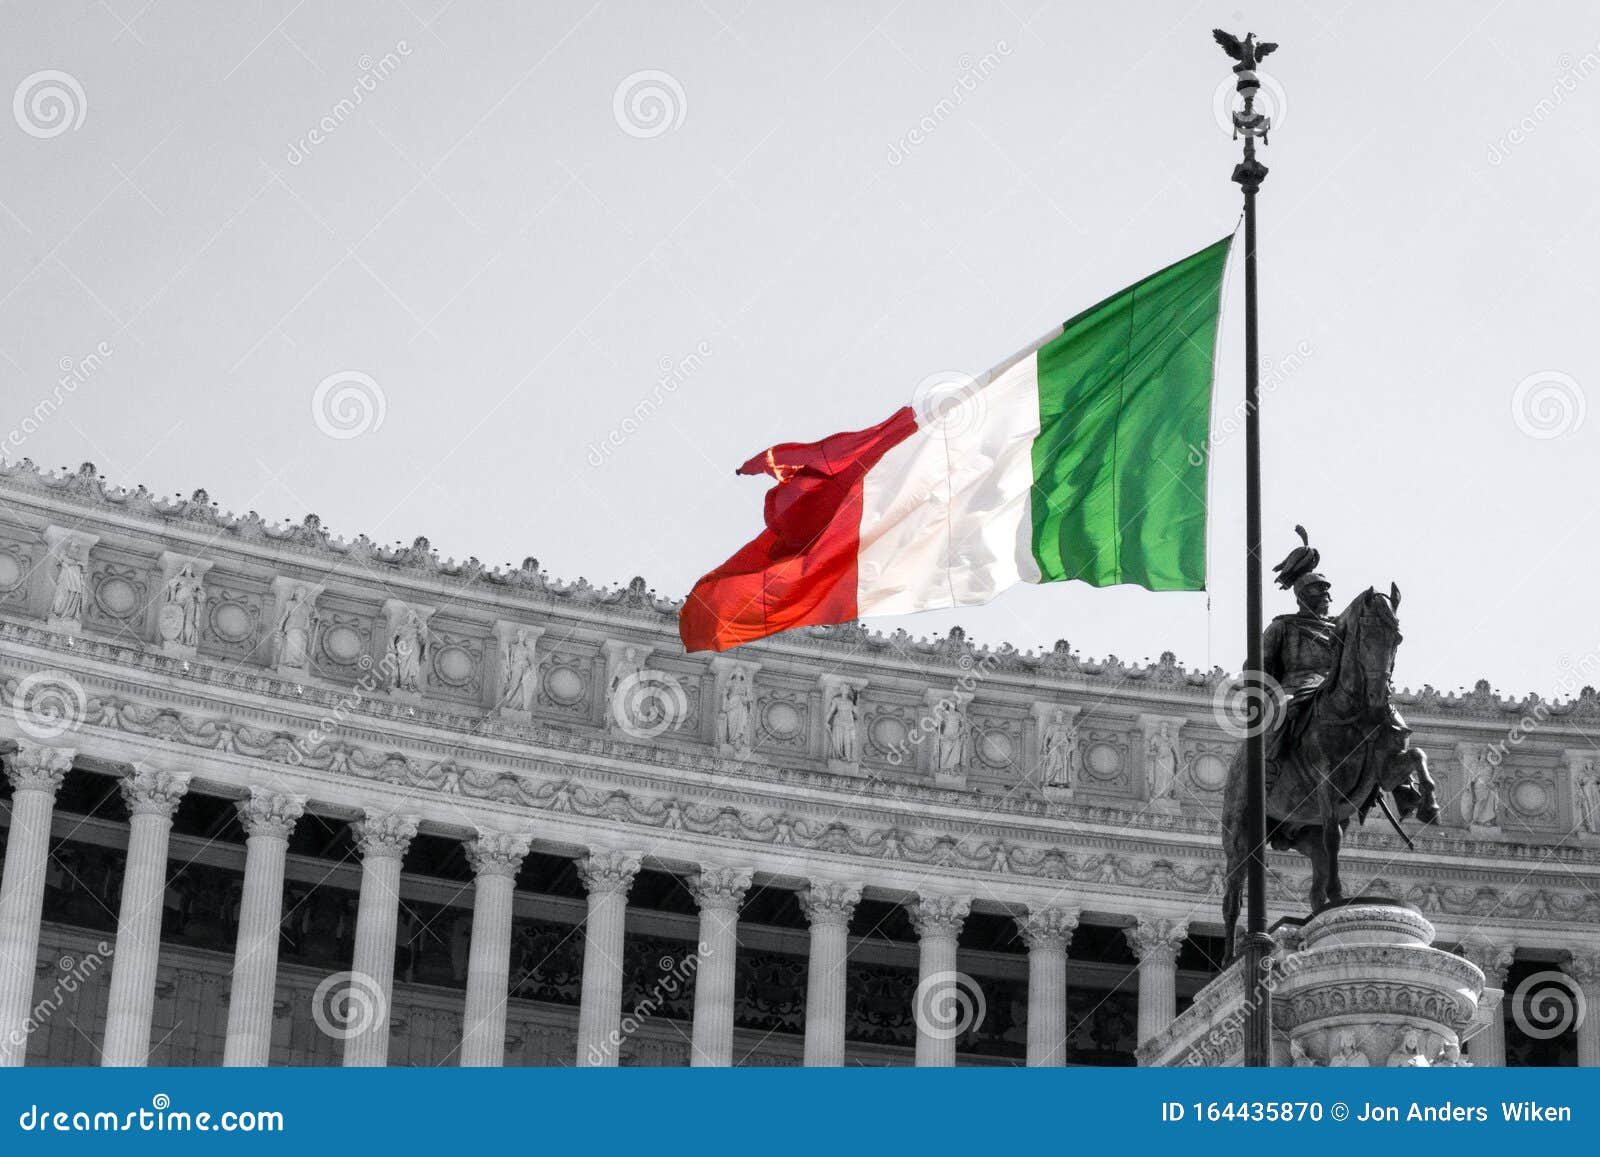 Italian flag in Rome. stock photo. Image of roma, column - 164435870